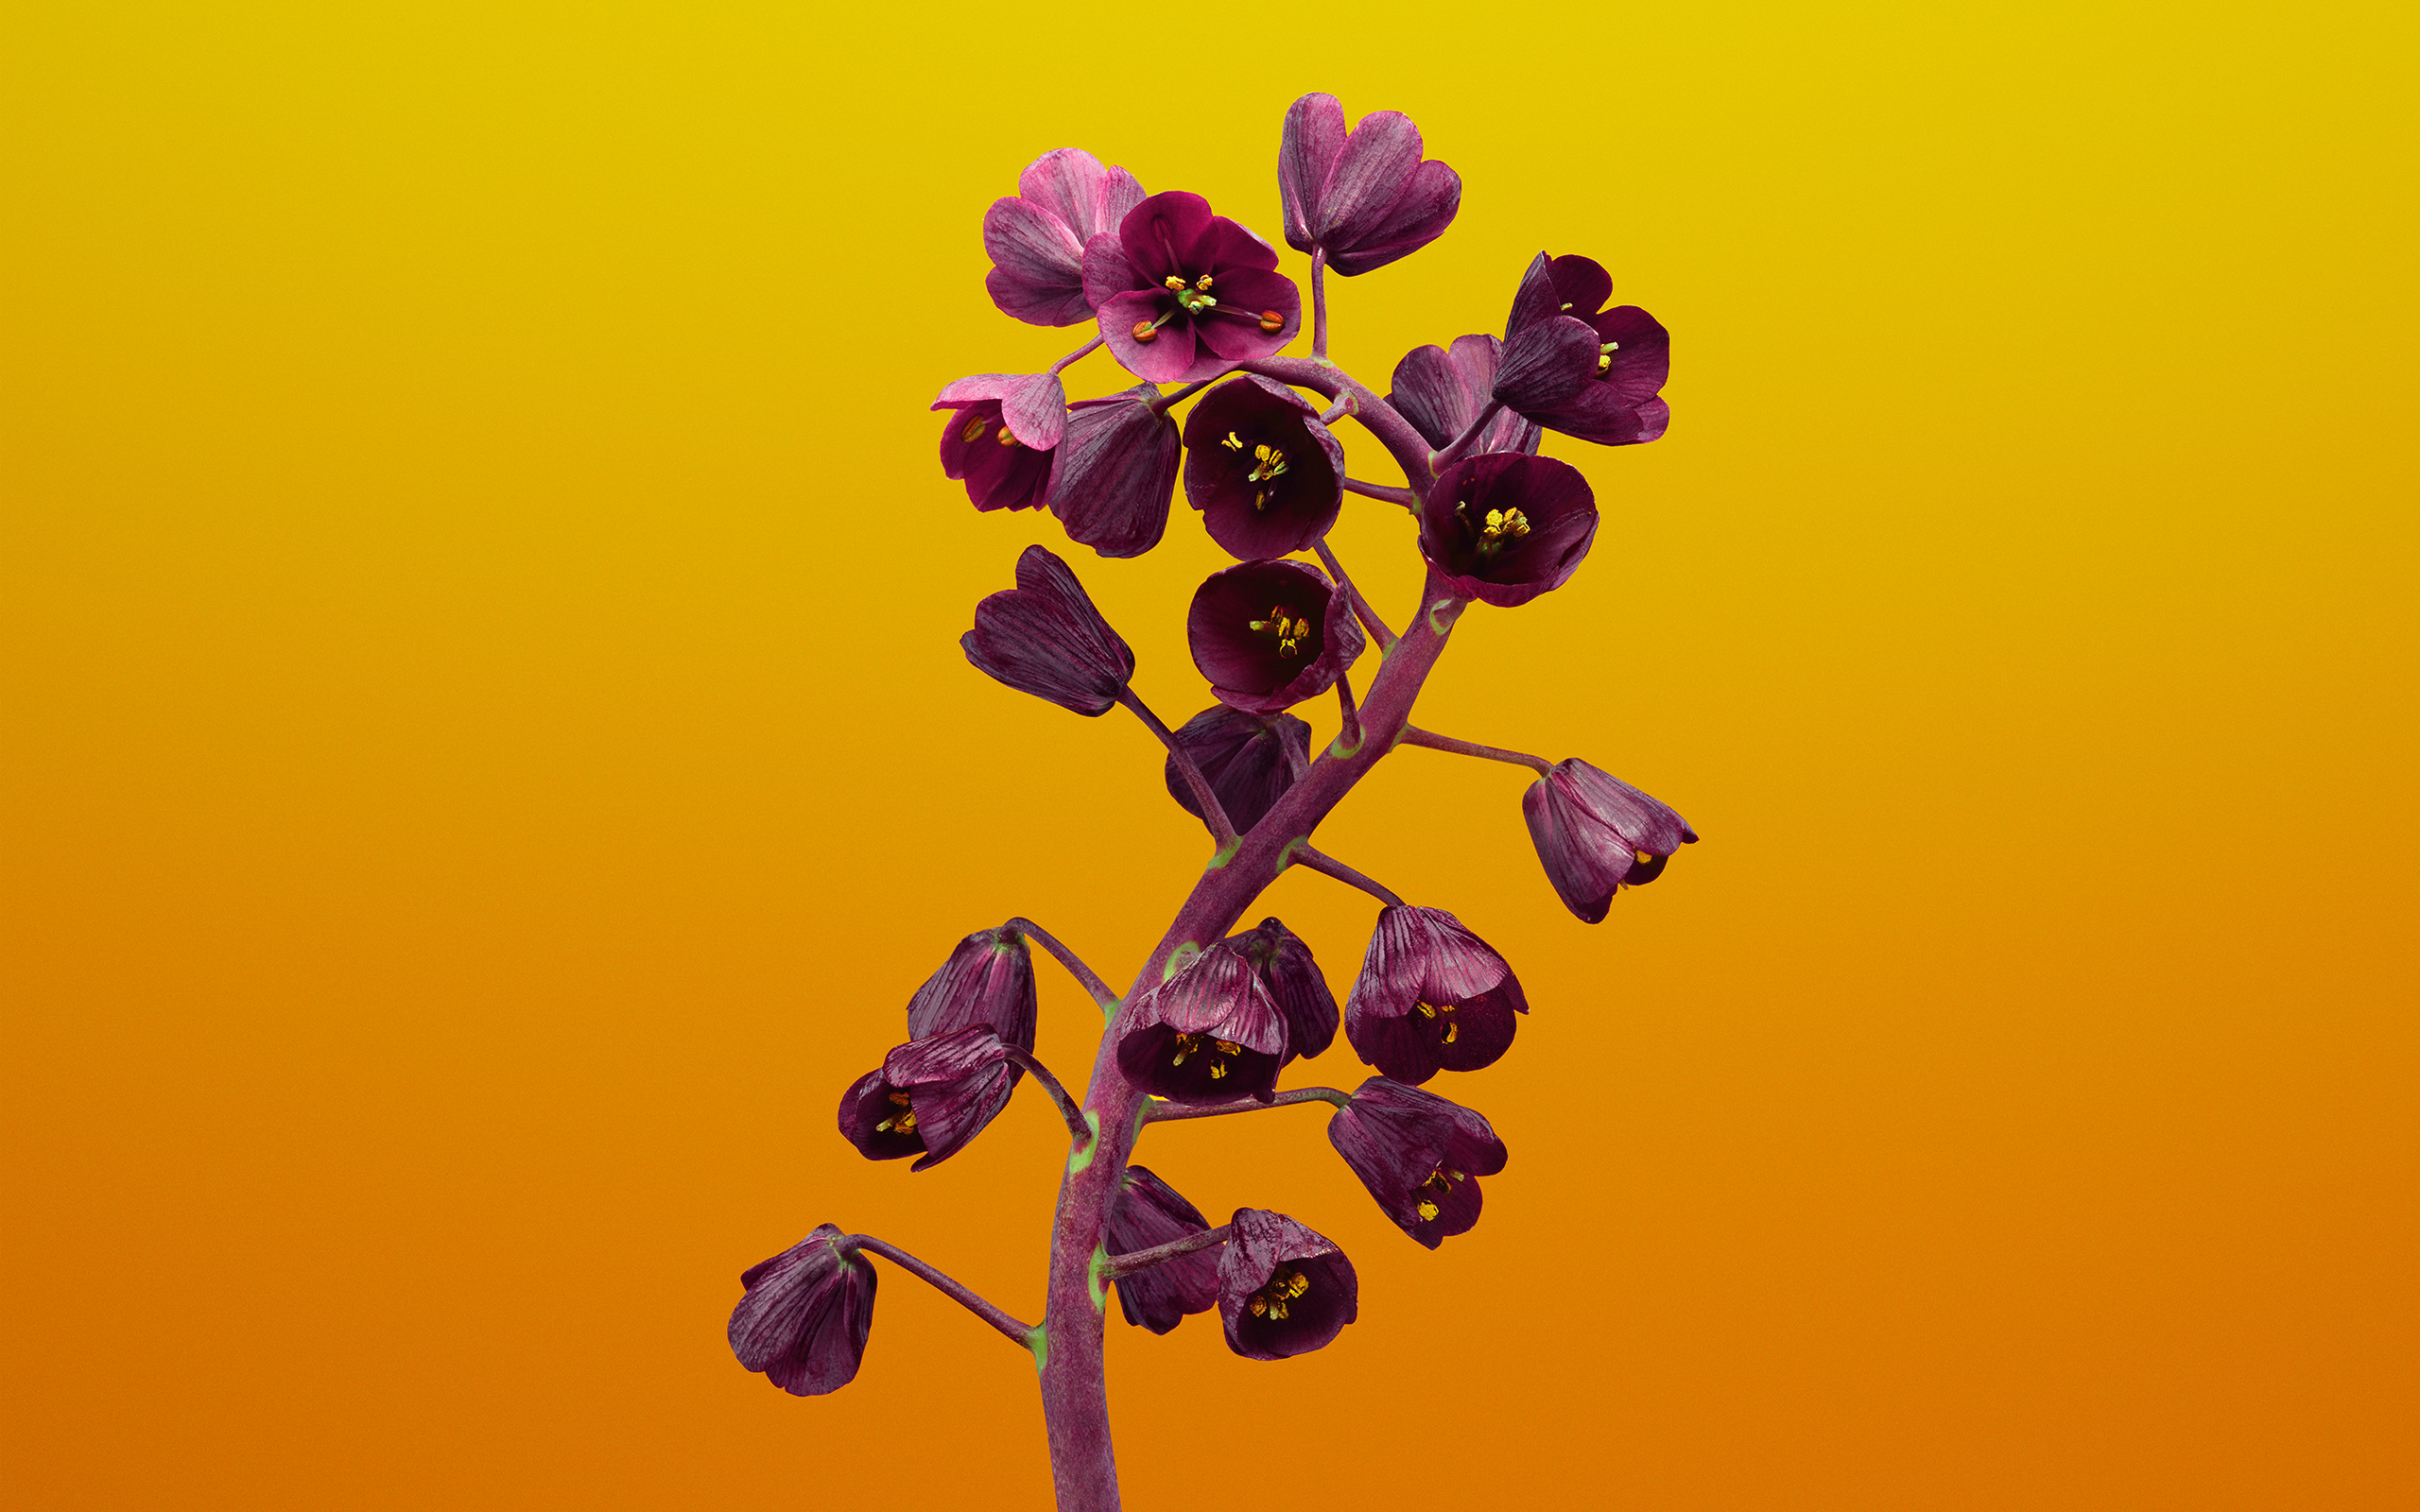 Fritillaria Flower iOS 11 Stock149208515 - Fritillaria Flower iOS 11 Stock - Stock, iOS, Gloriosa, Fritillaria, flower